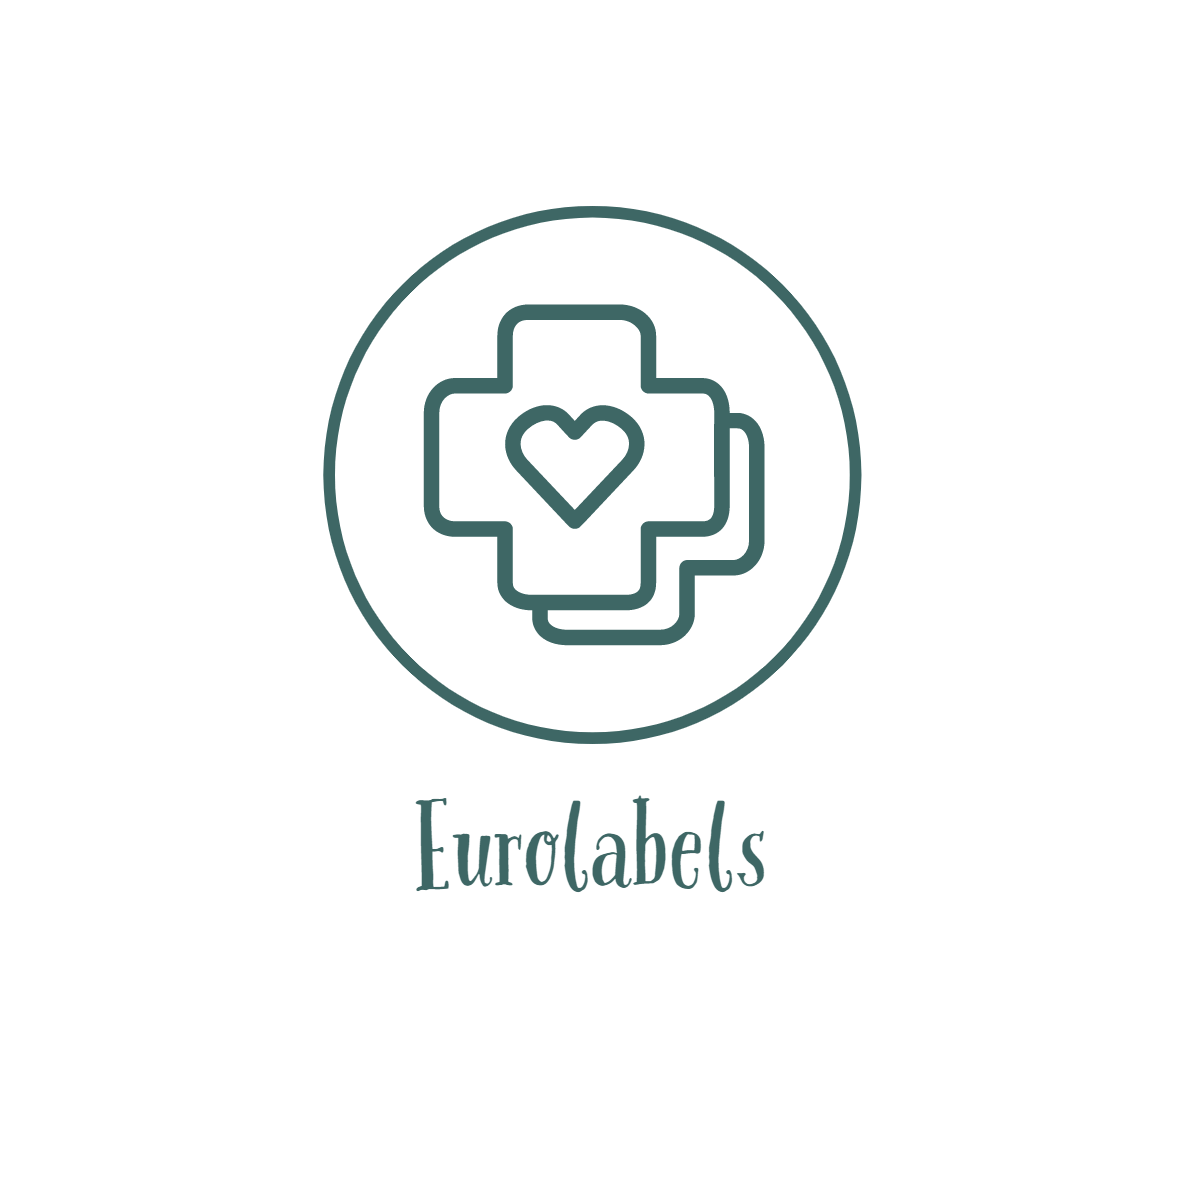 Eurolabels logo